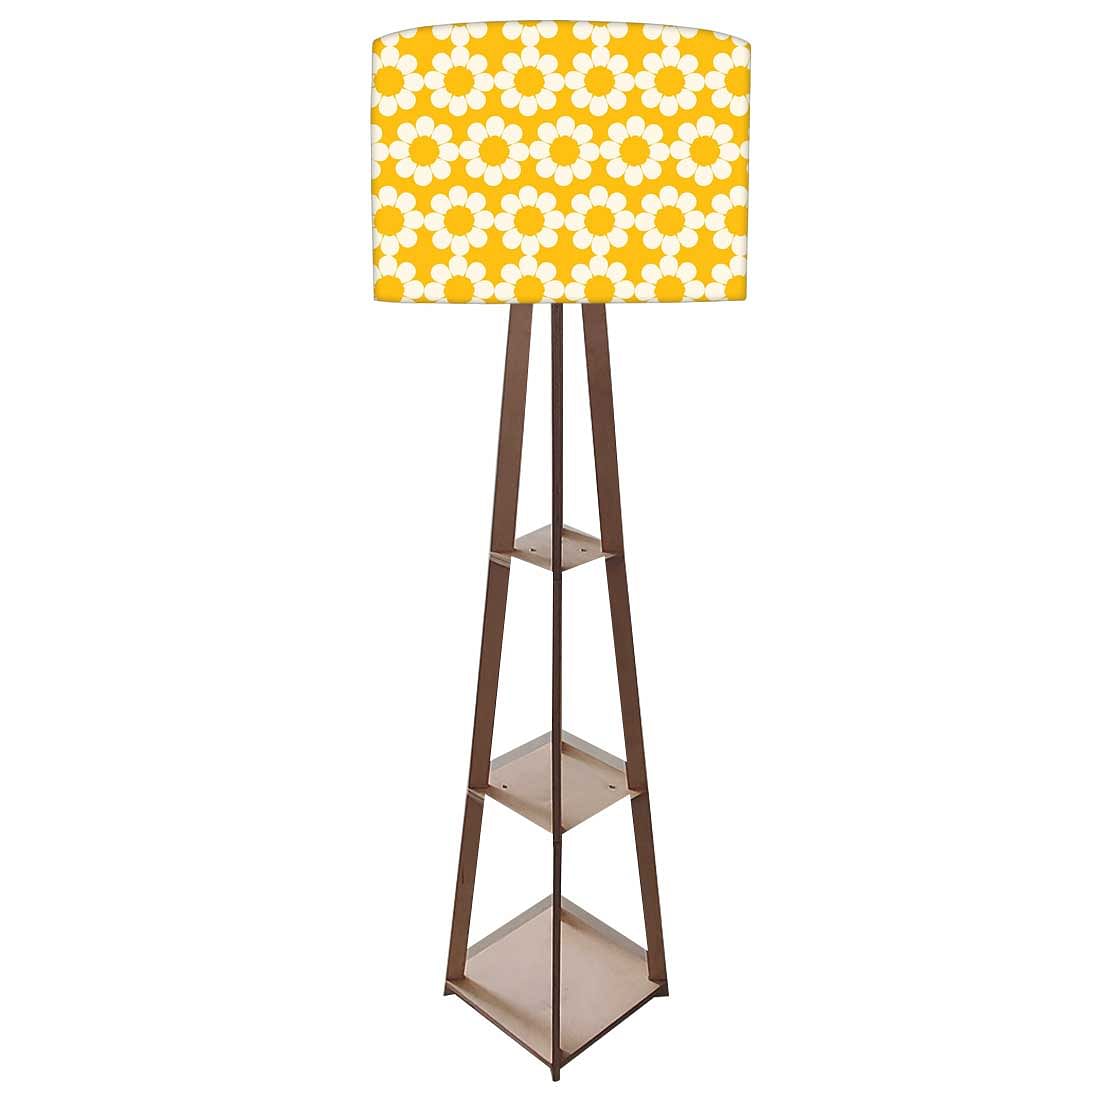 Standing Wooden Tripod Light - Yellow Patterns Nutcase